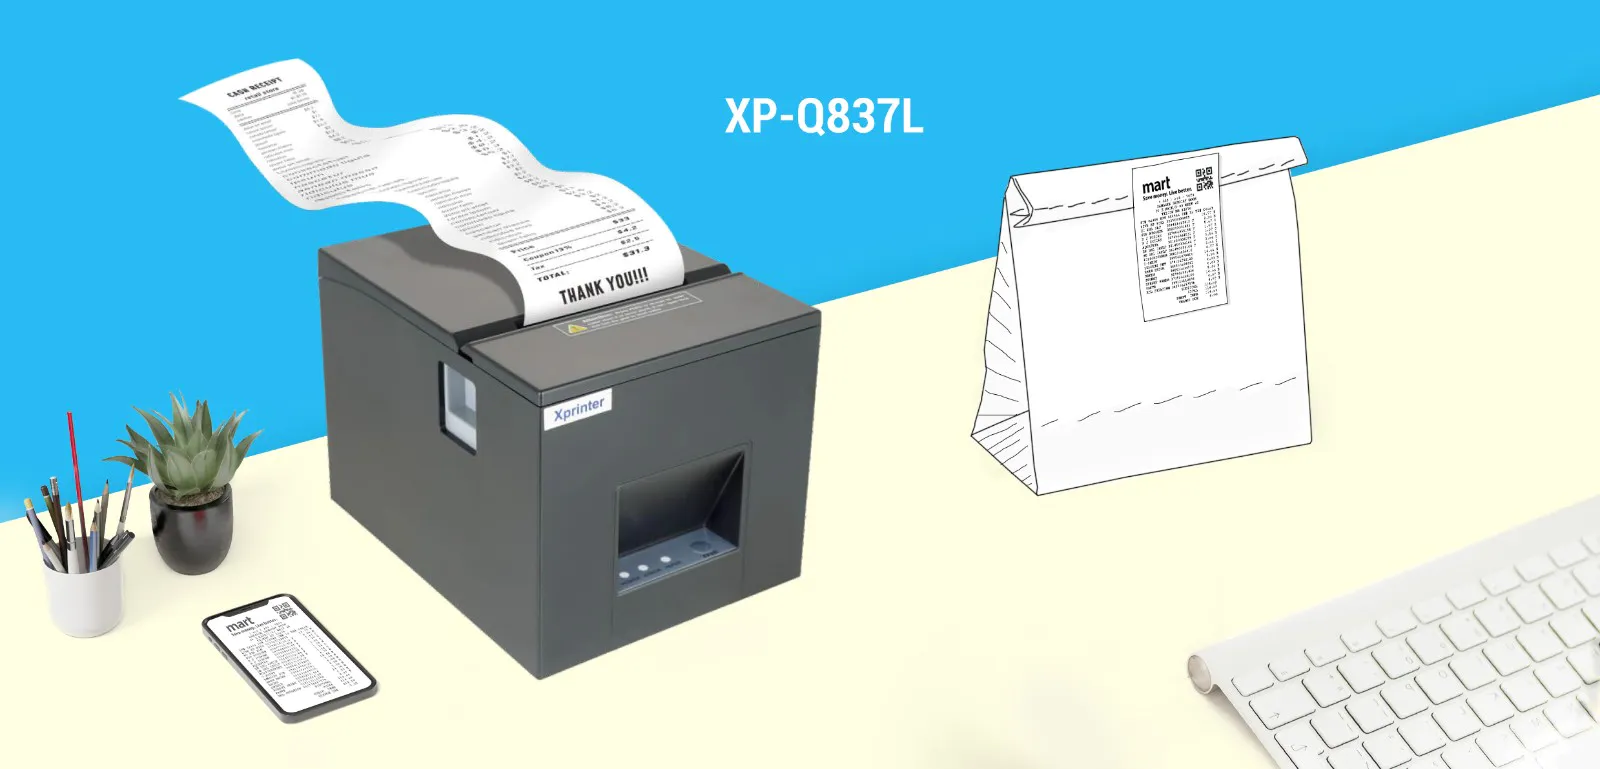 Xprinter multilingual cashier receipt printer factory for retail